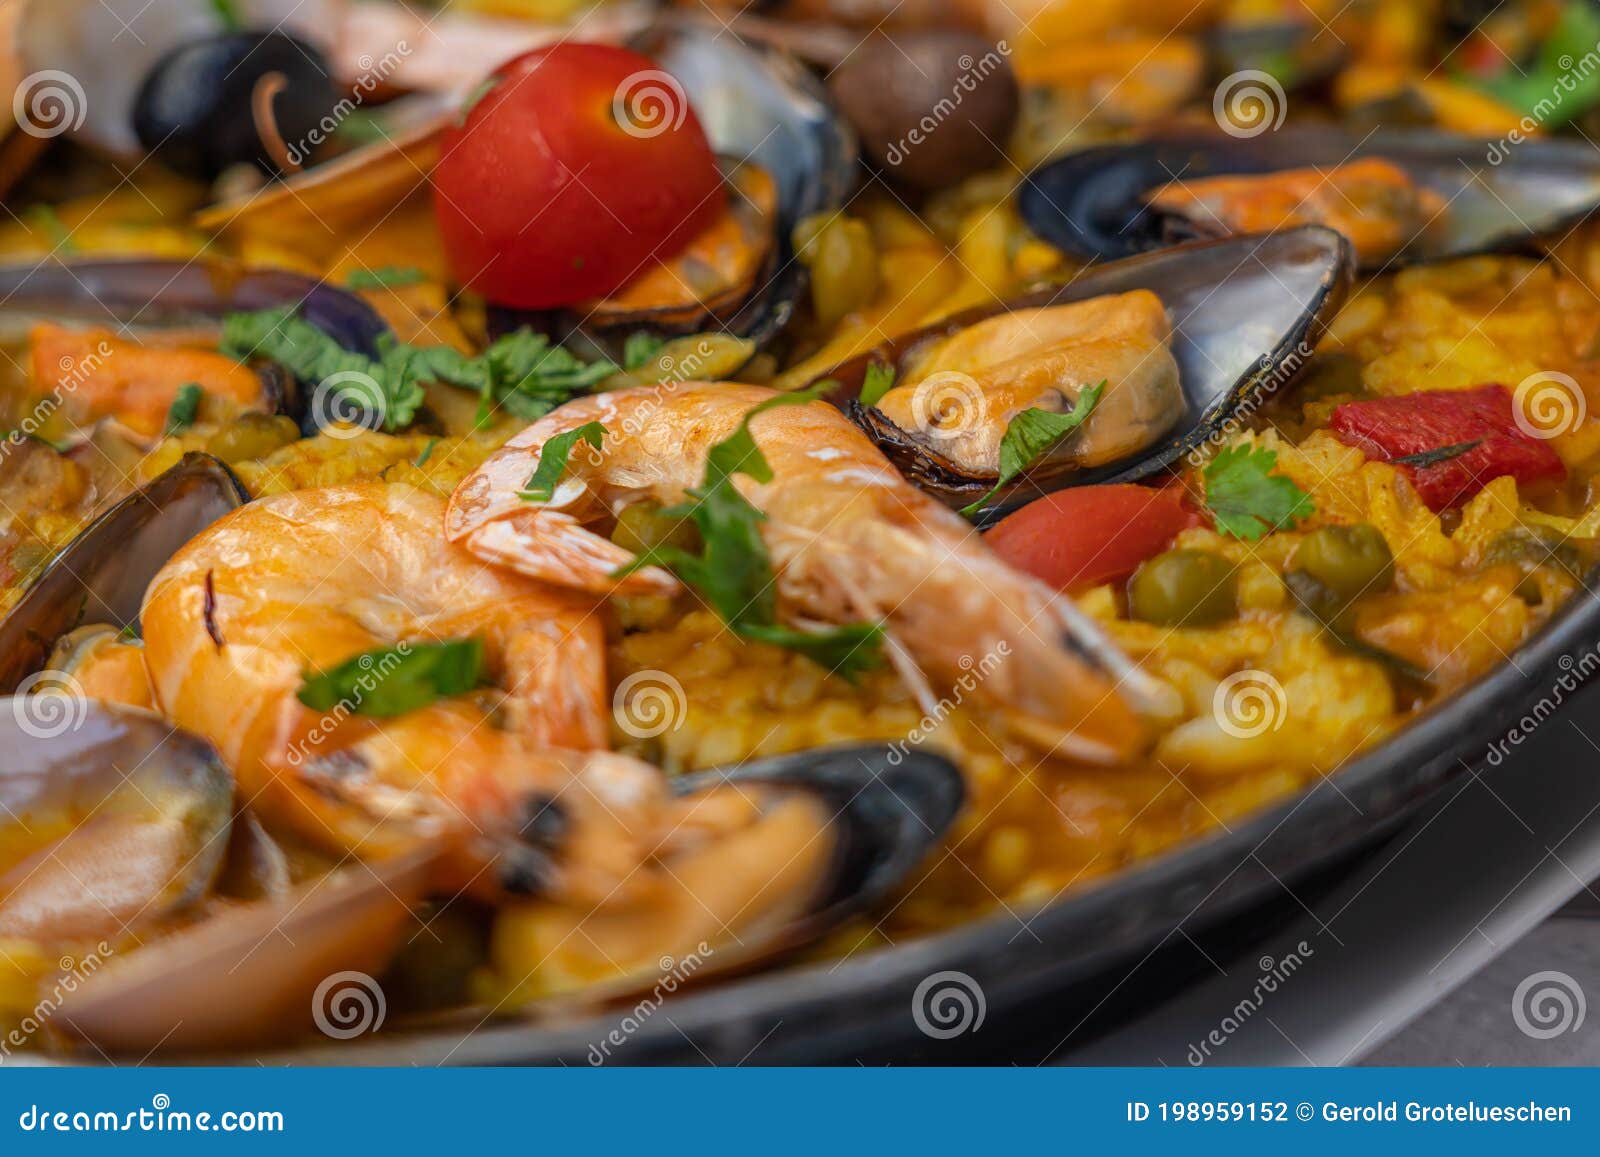 spanish seafood paella de marisco, paella marinera